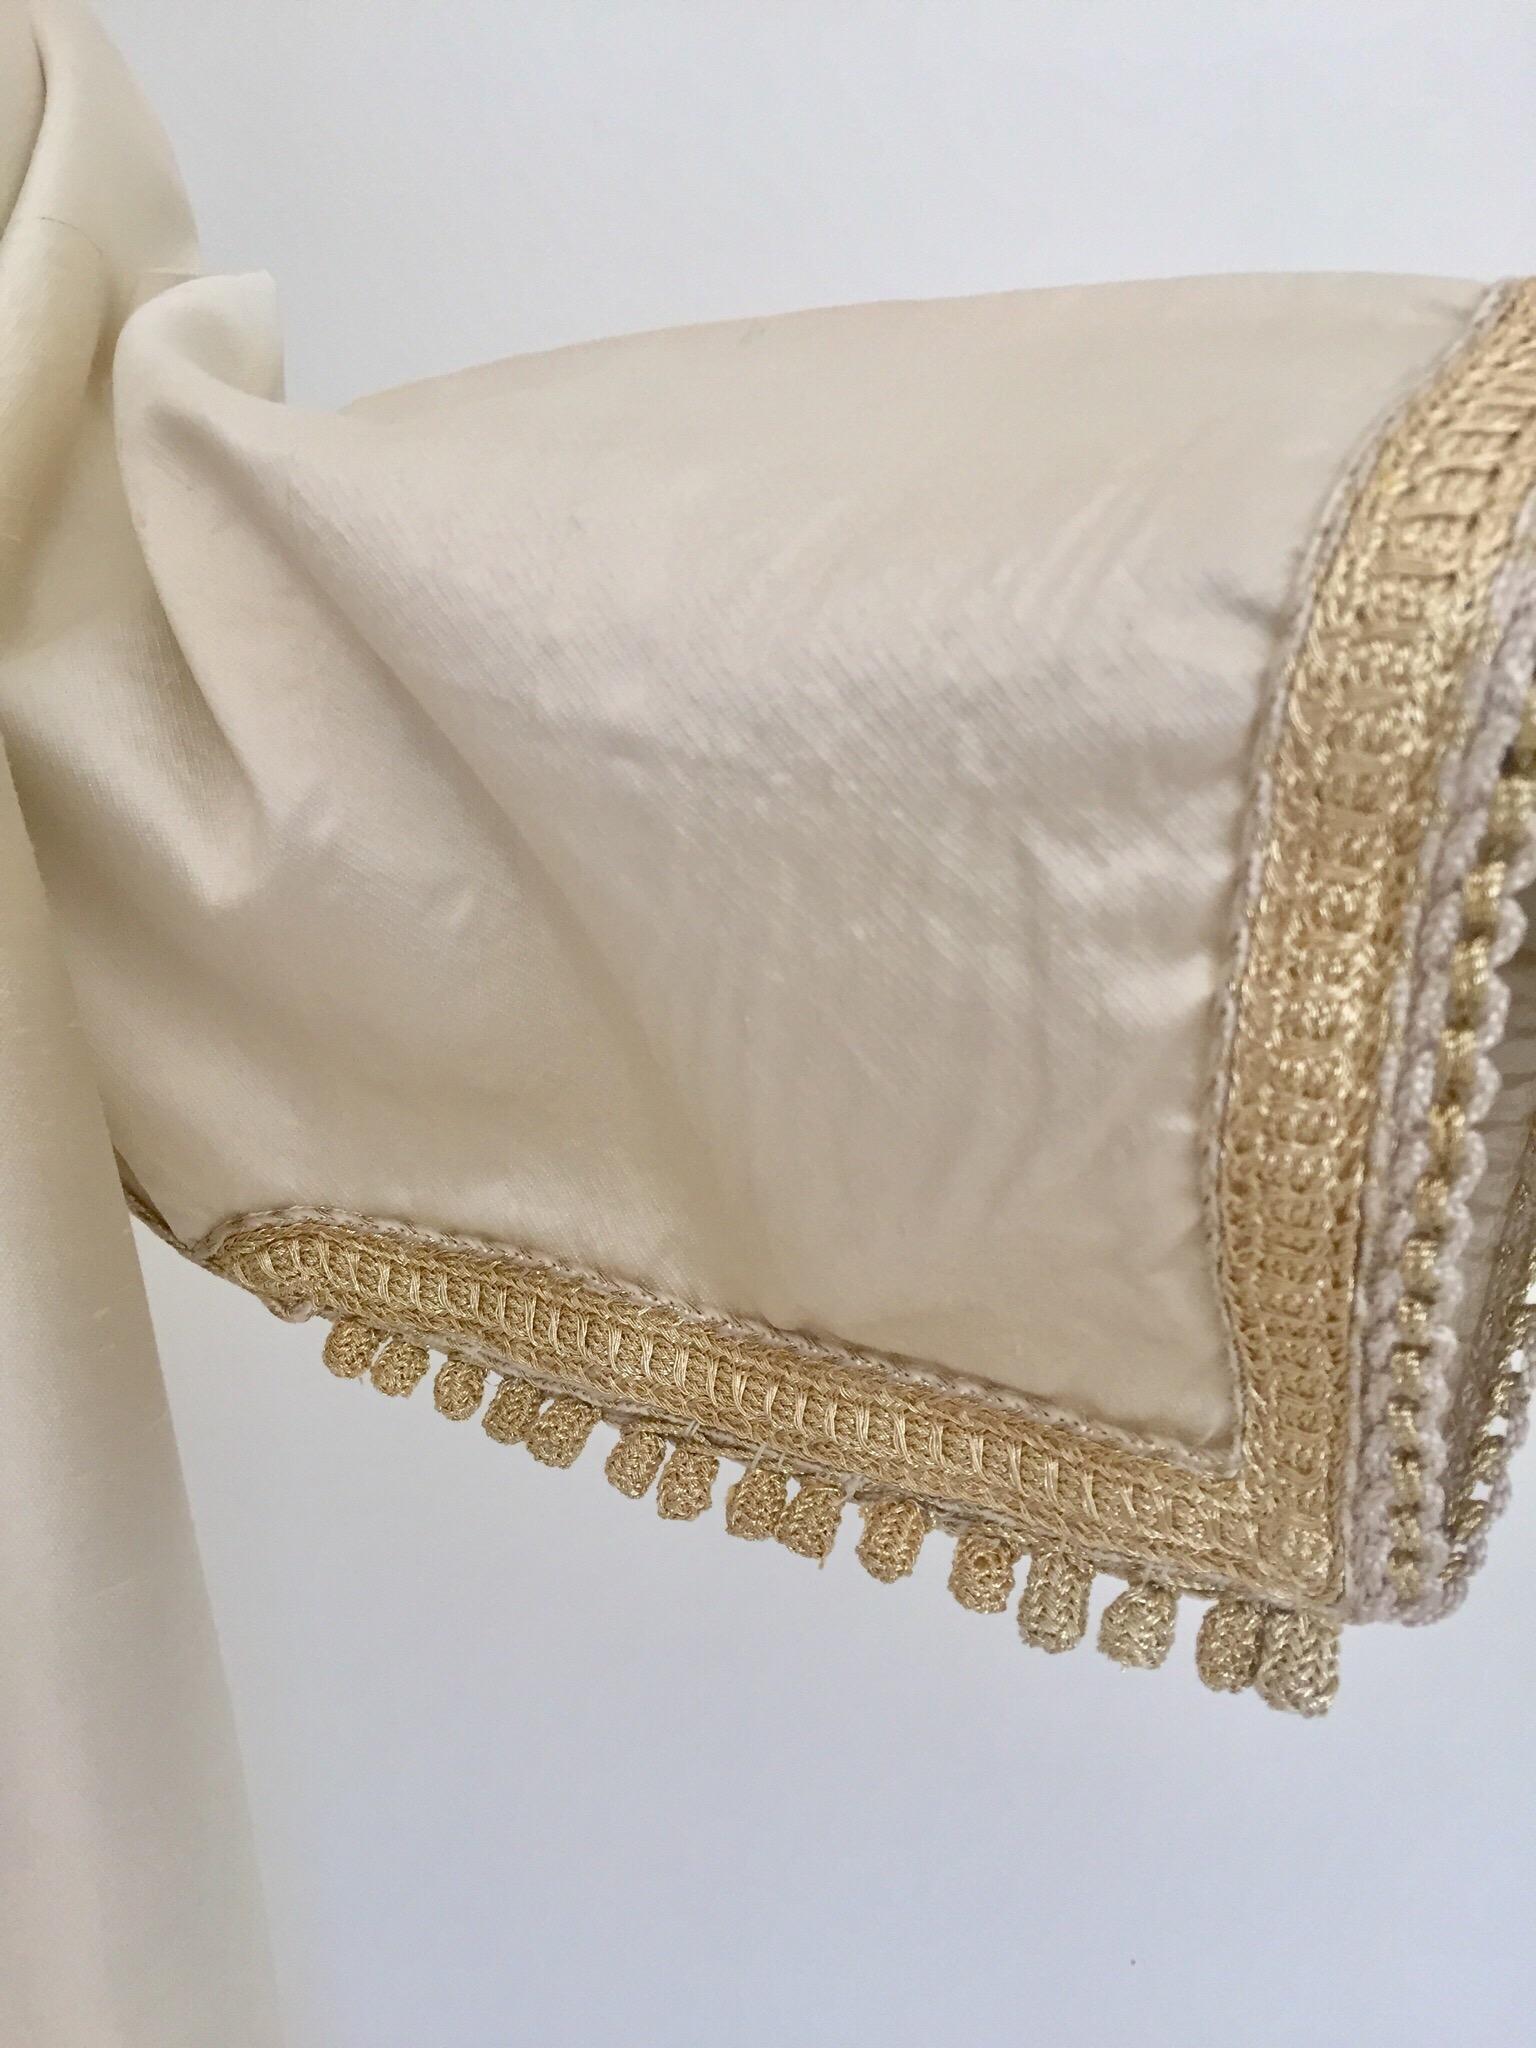 Moroccan Elegant Luxury Dupiono Silk Caftan Gown Maxi Dress For Sale 6